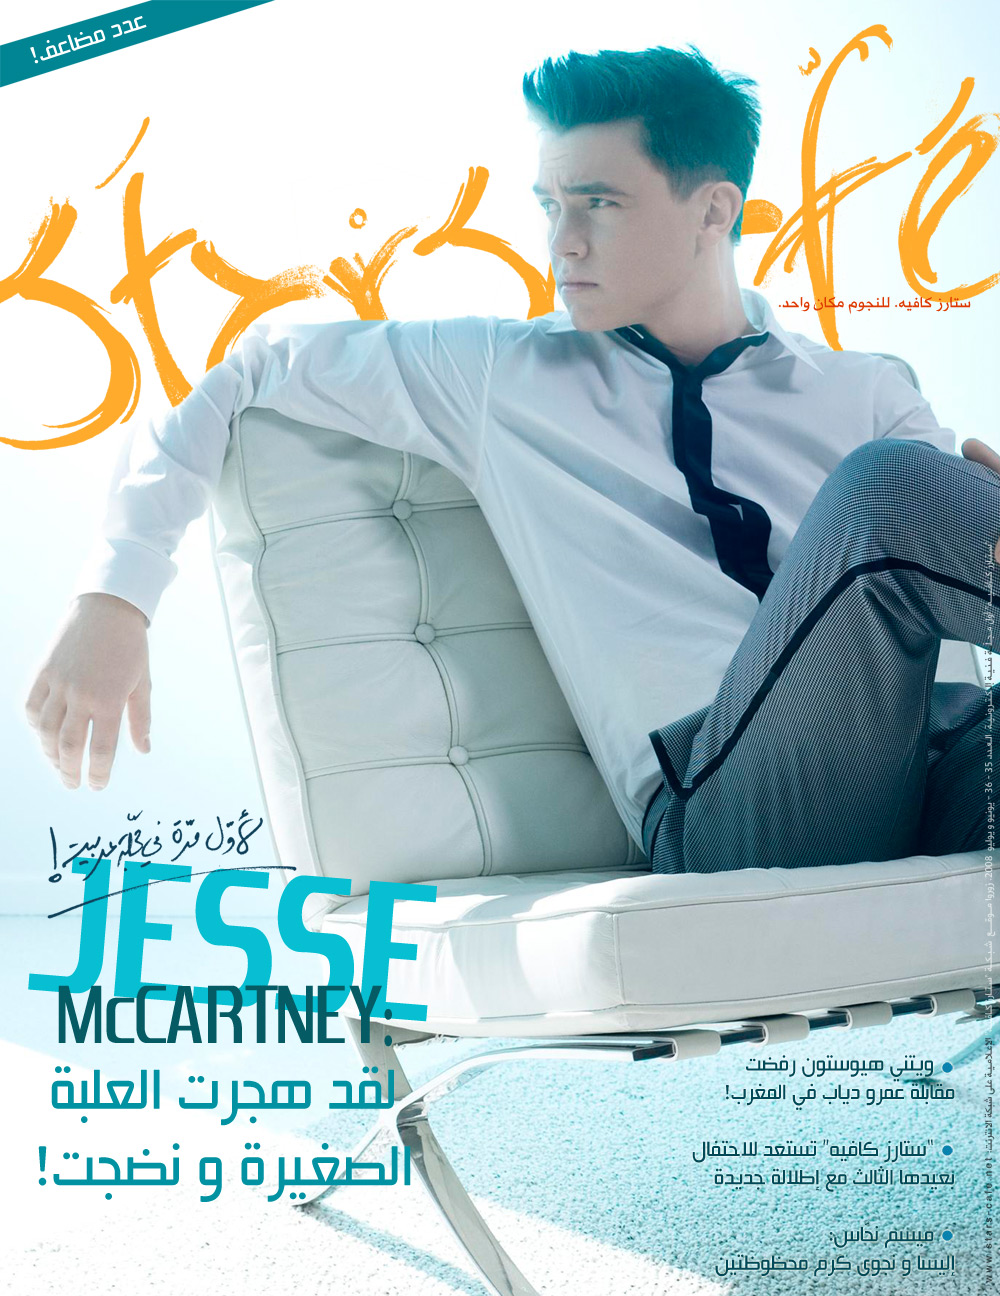 Jesse McCartney on "Stars Cafe" magazine cover